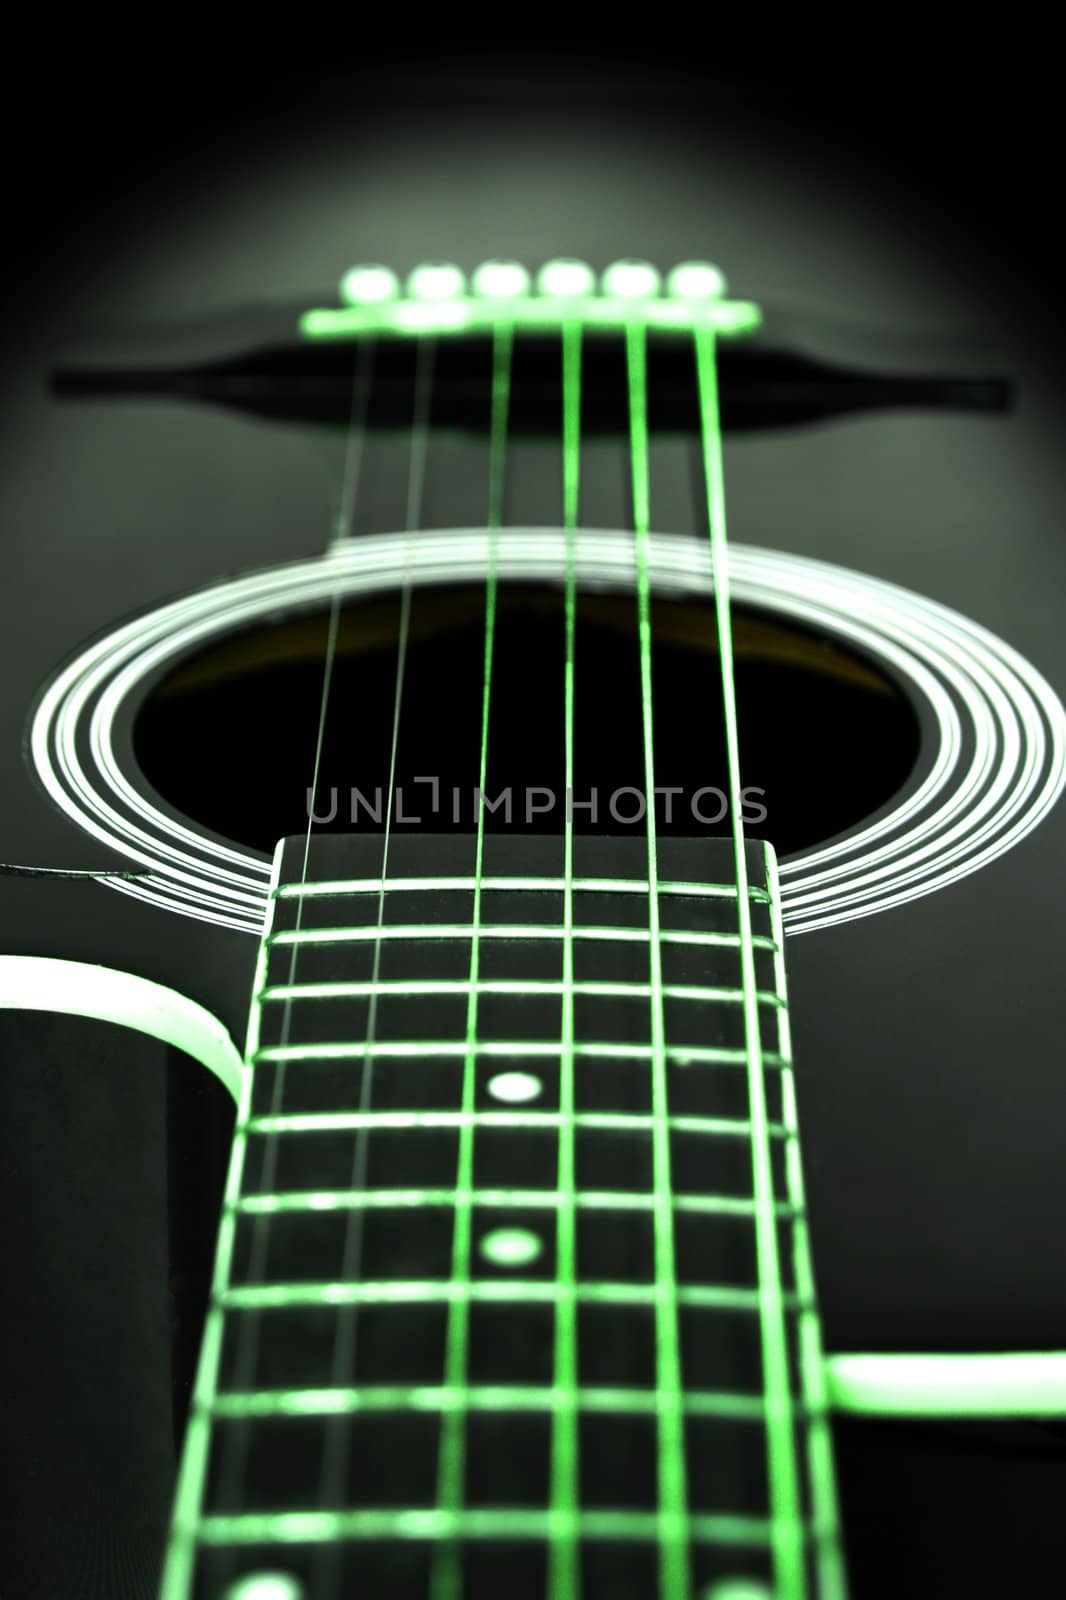 Green guitar strings - lighting effect at night